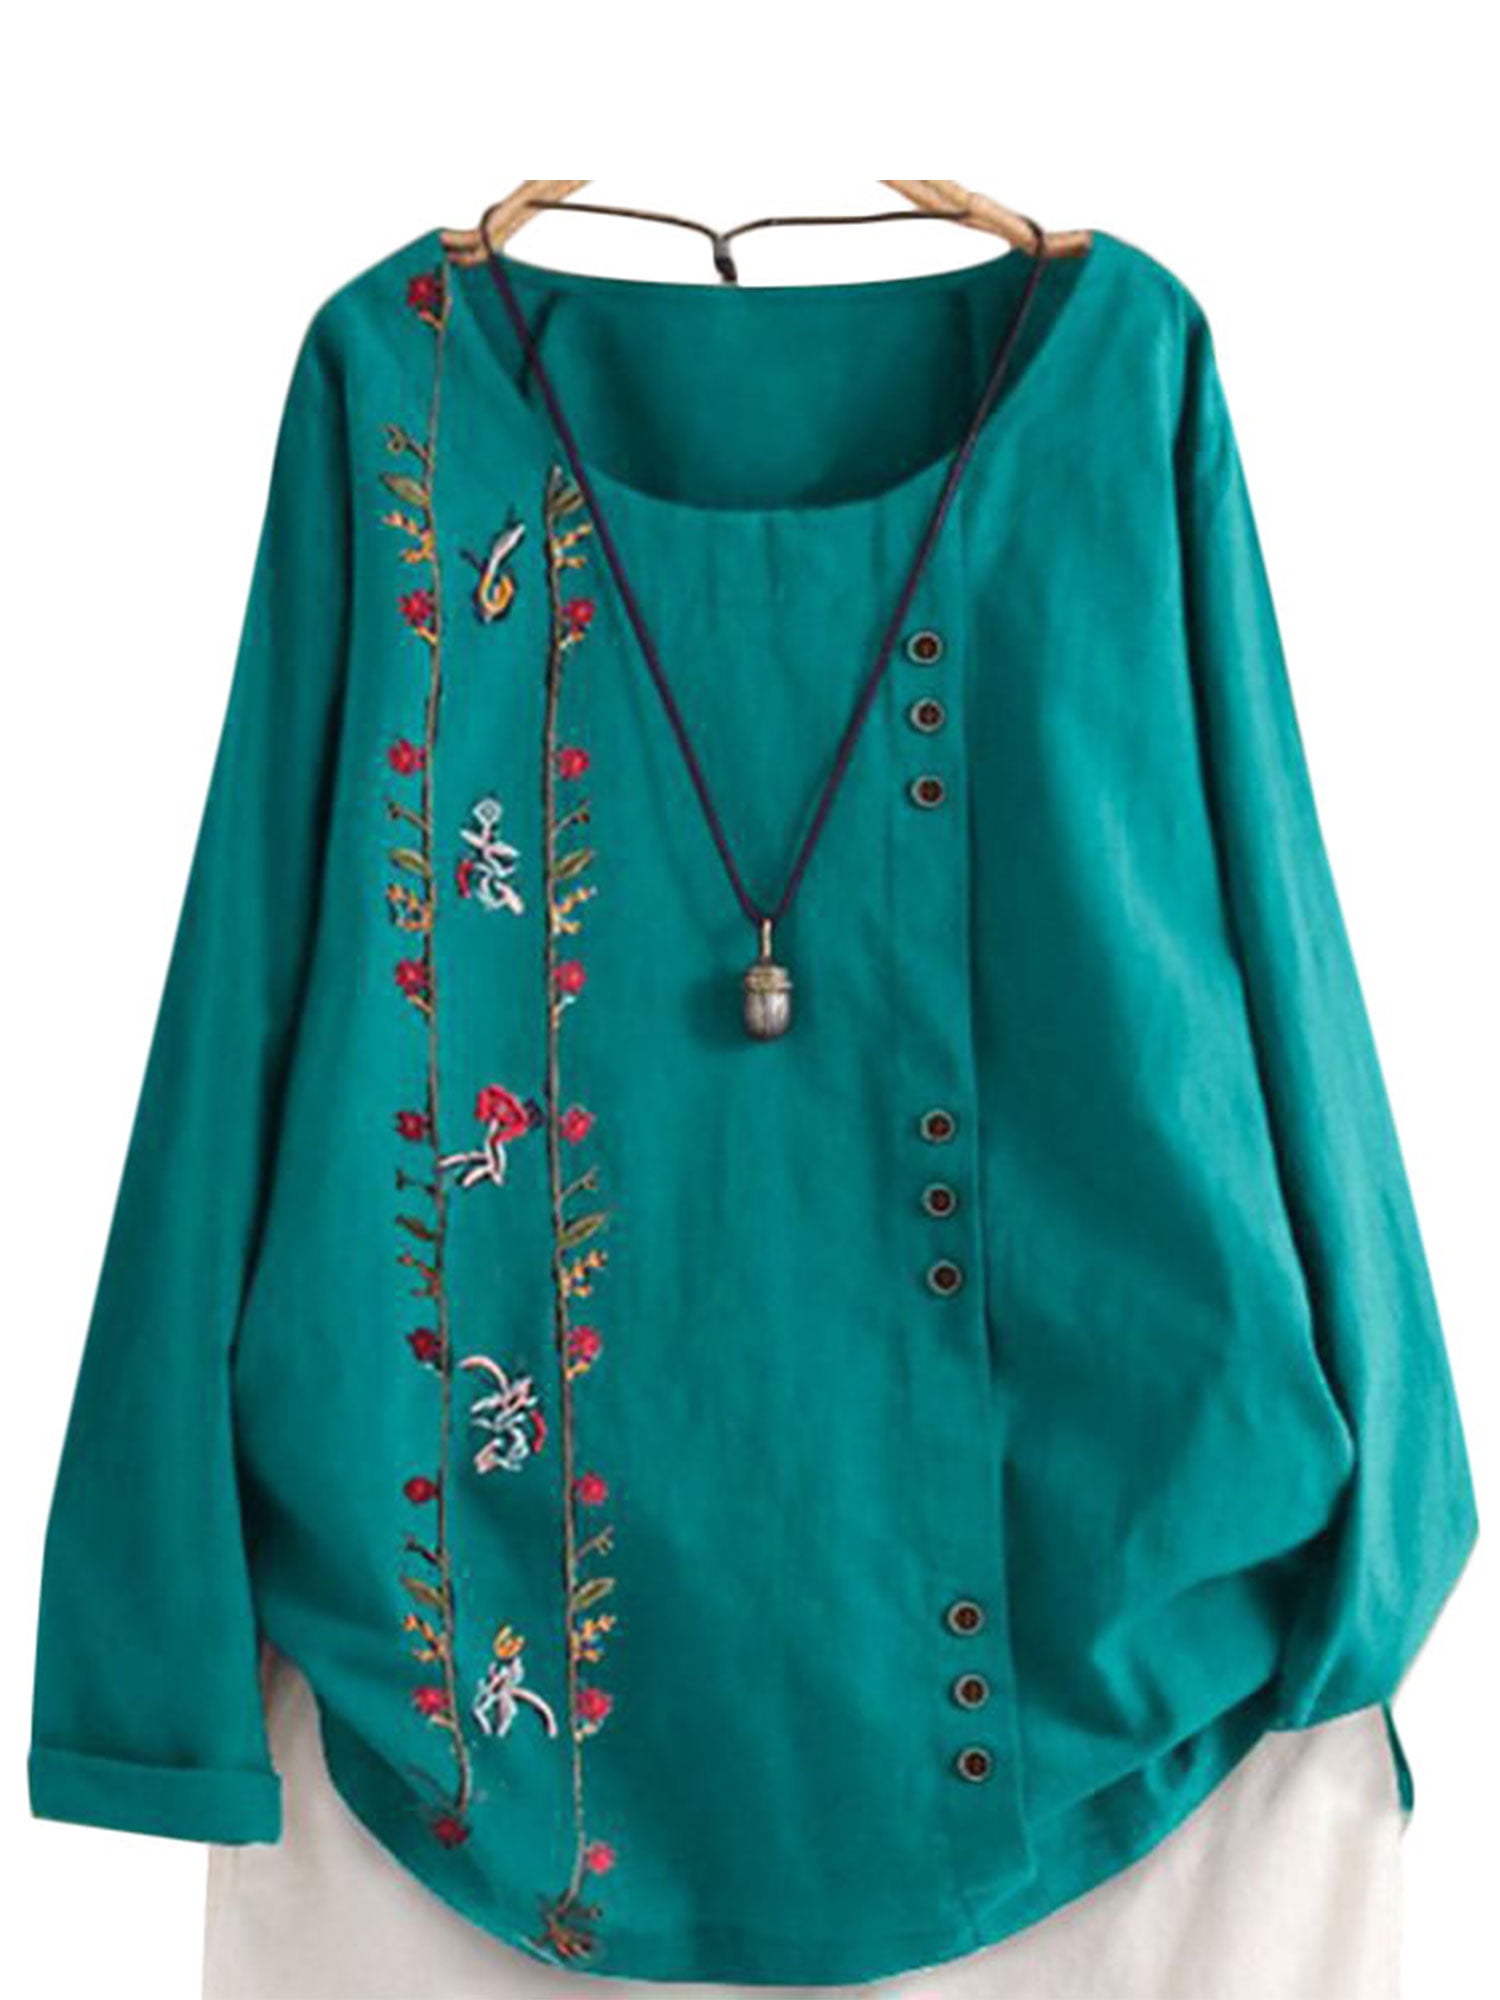 ZANFUN Tee Shirts for Women Plus Size Vintage Wheat Ear Print Chic Cotton Linen Short Sleeve Summer Tops Blouses S-5XL